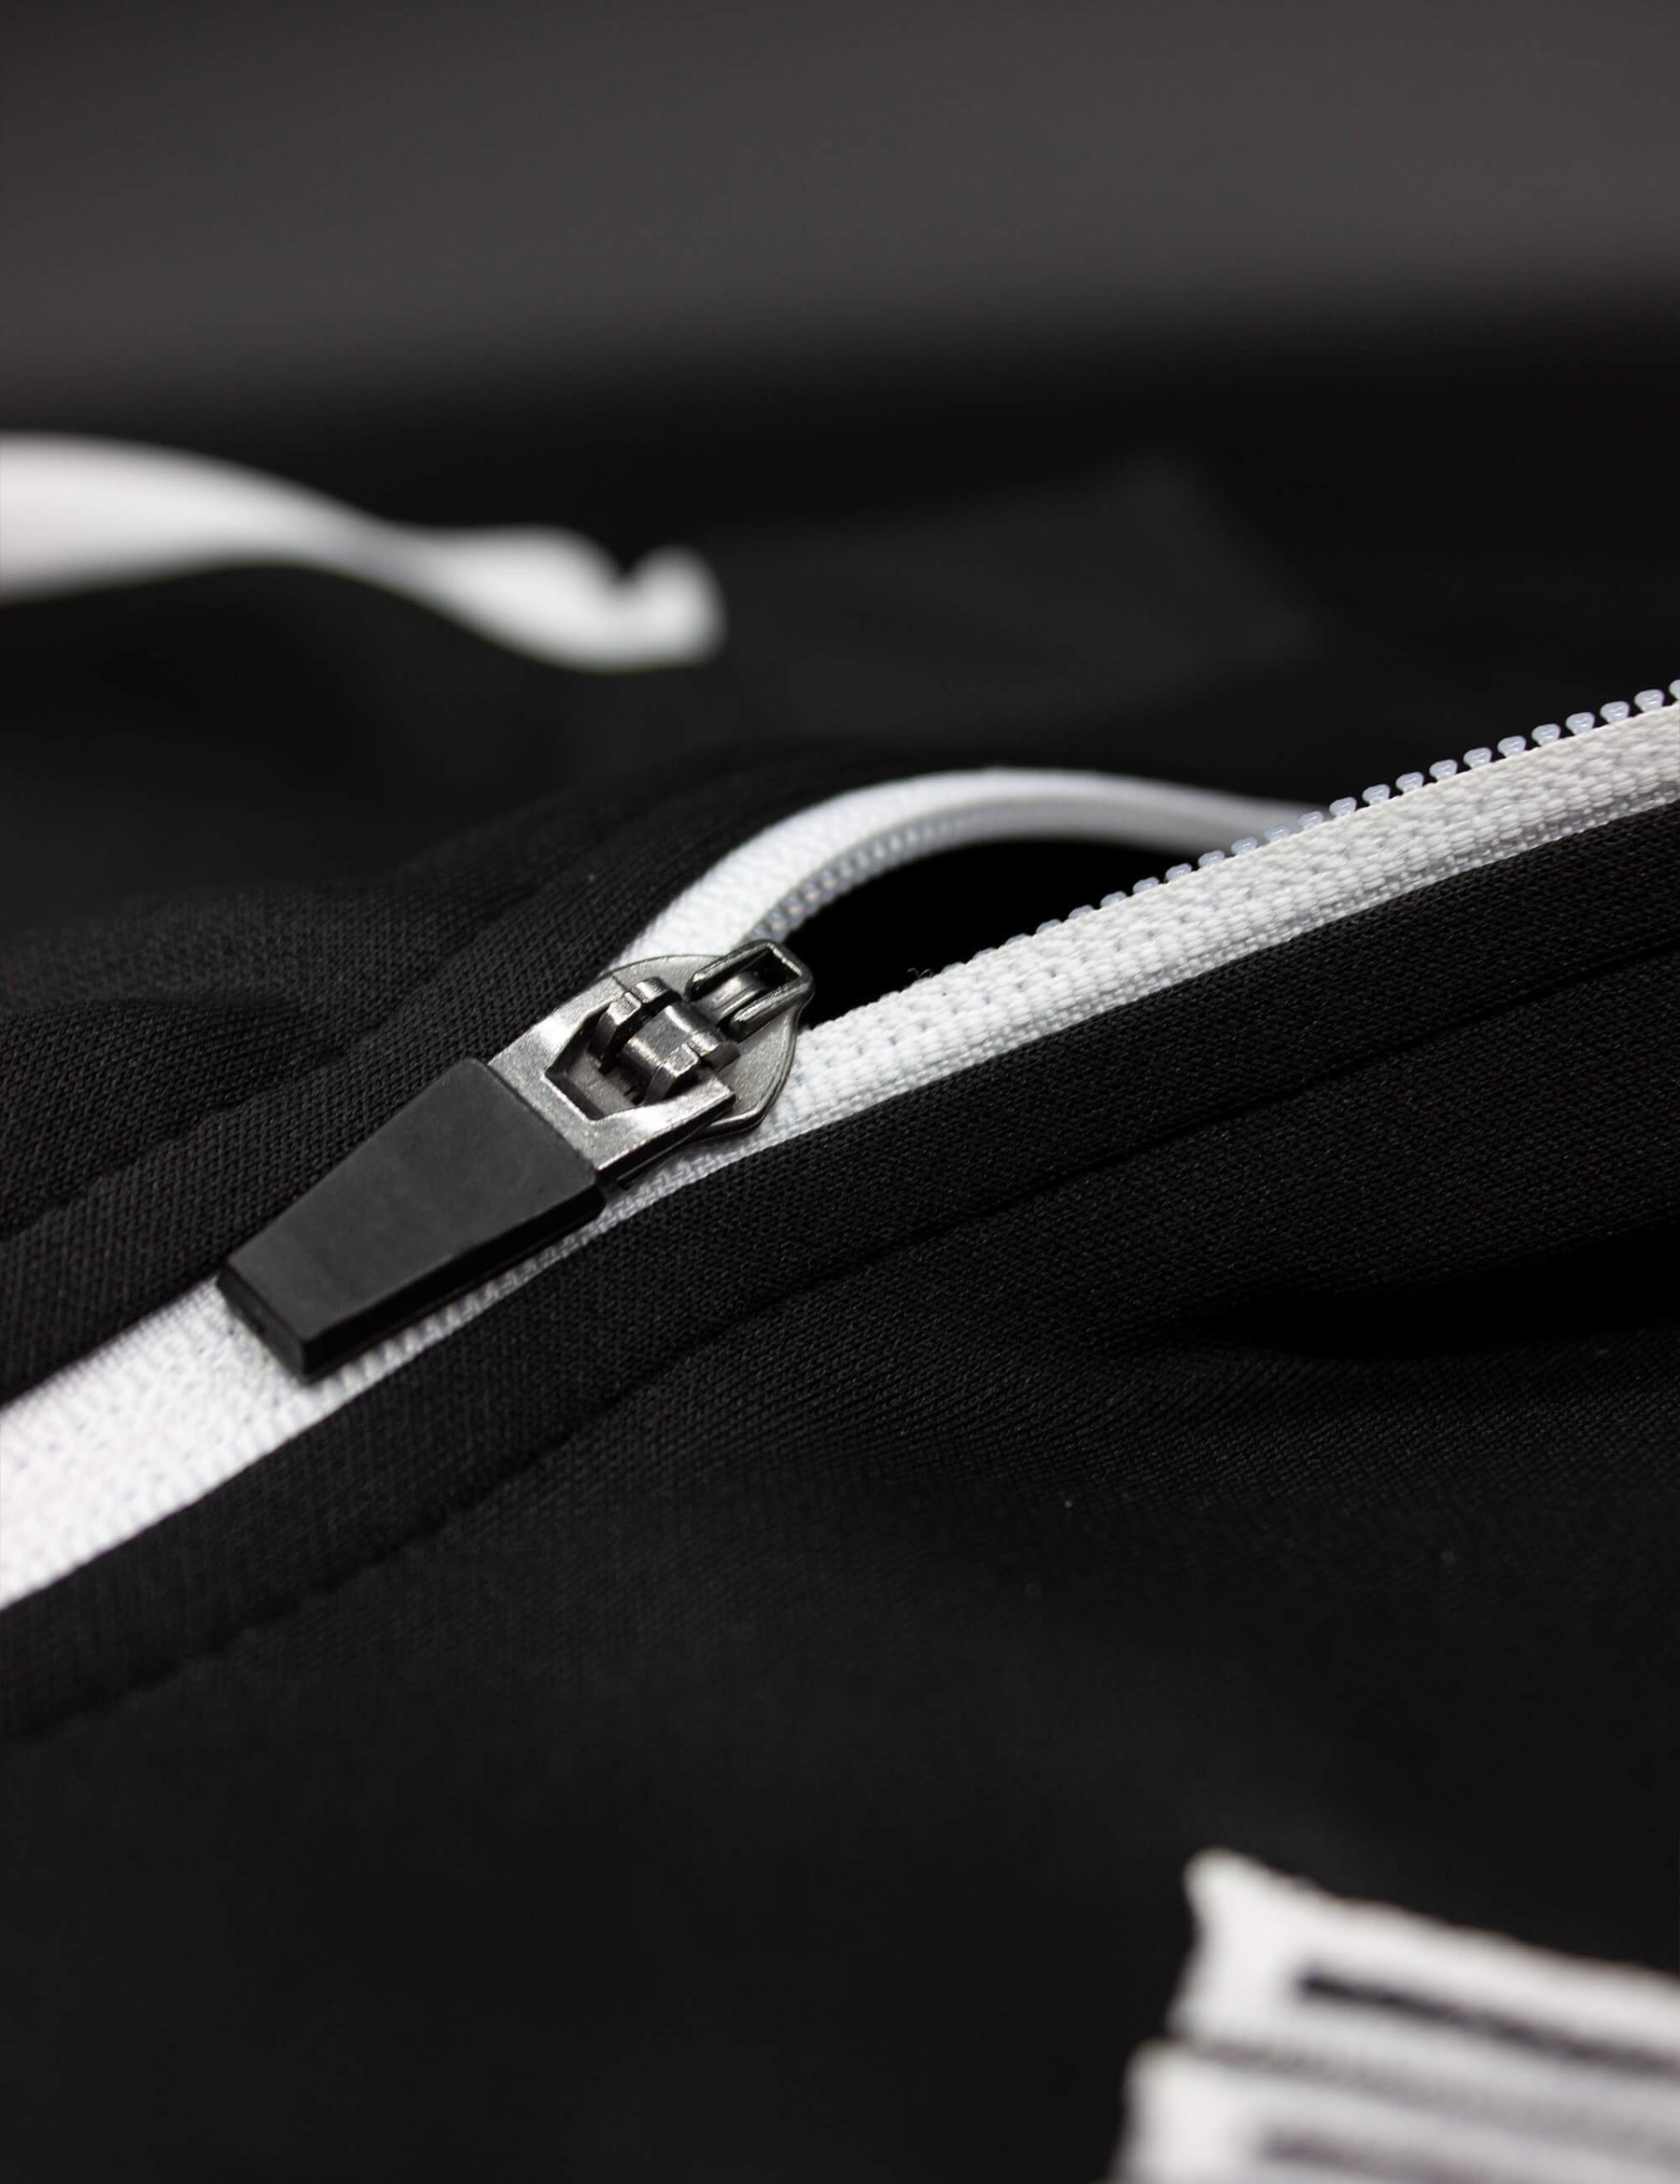 Detail shot of black/white calisthenics jacket